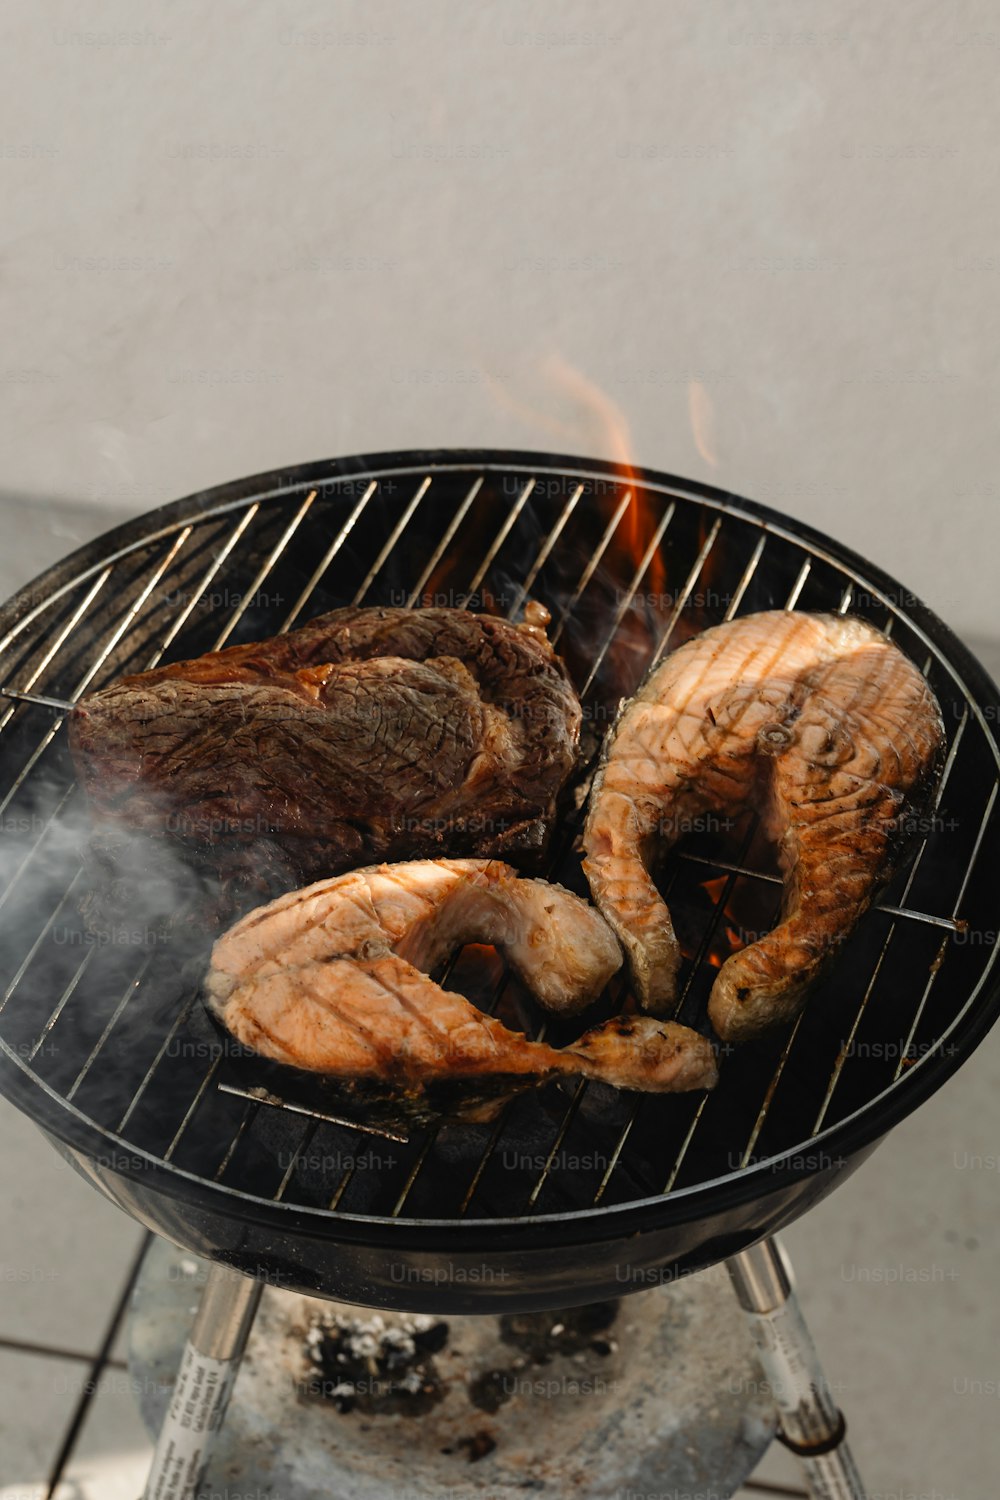 un barbecue avec de la viande et des légumes cuits dessus